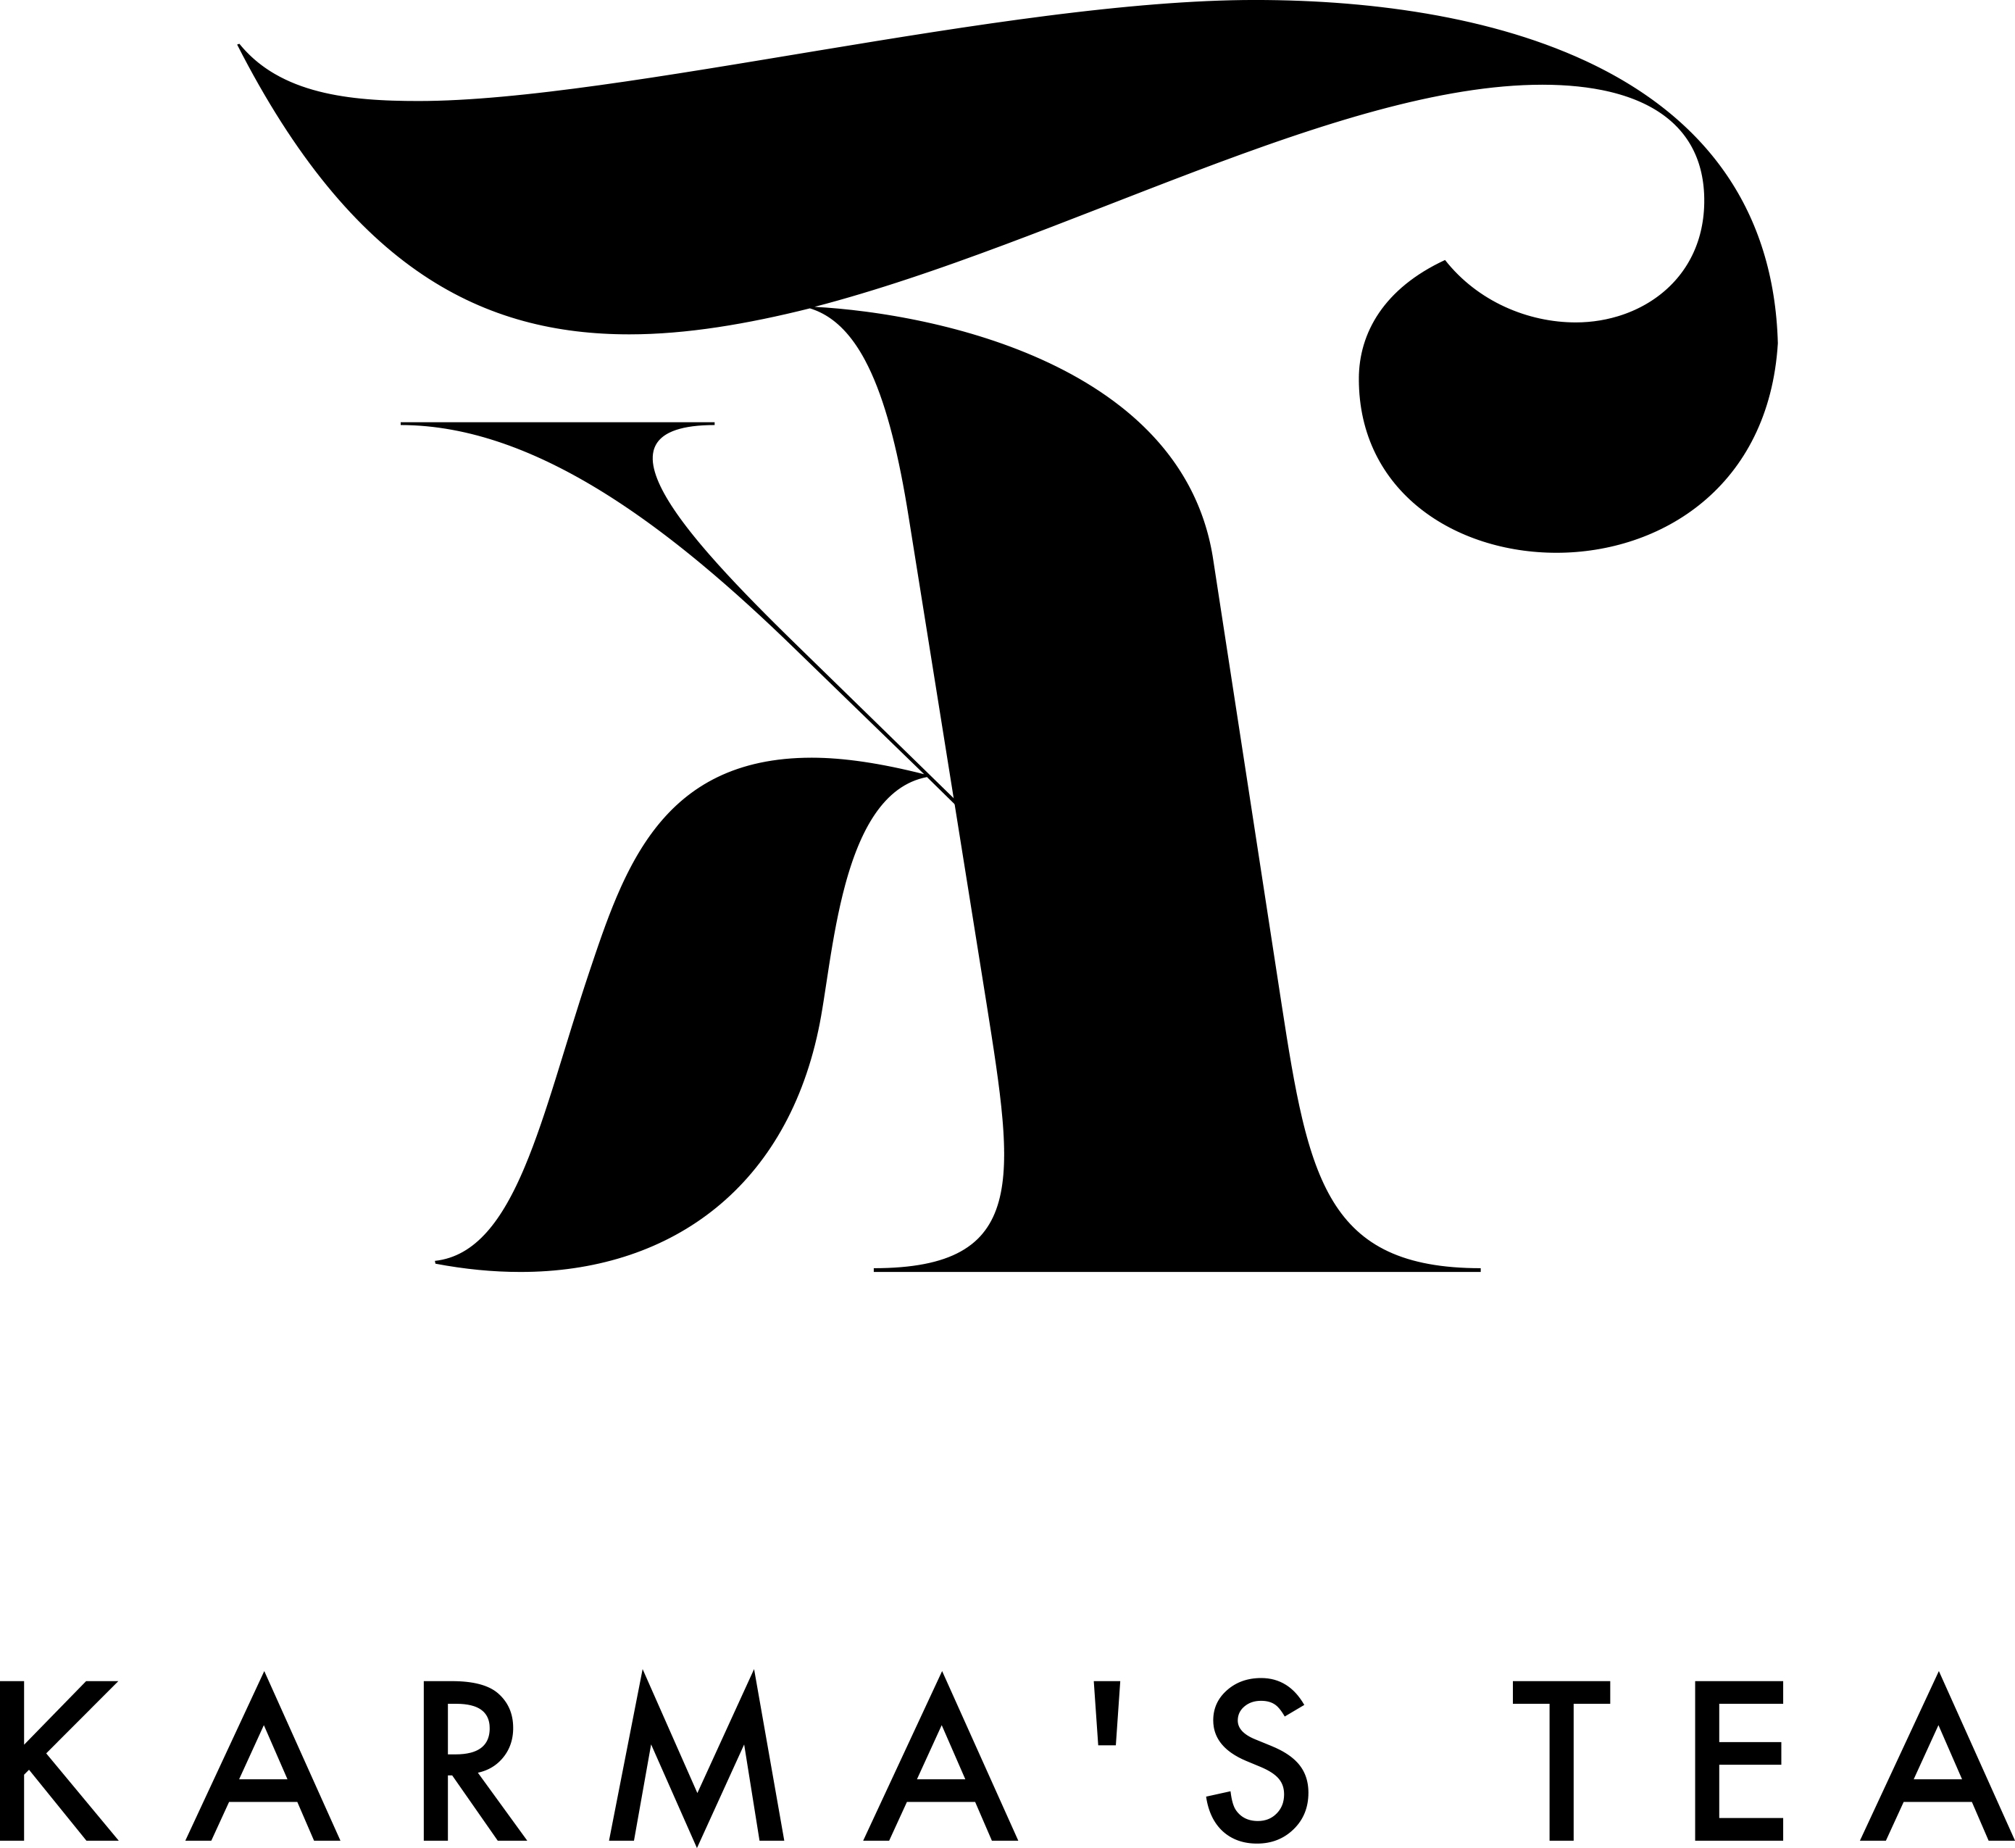 Karma’s Tea Electrify On “What Do You Do”